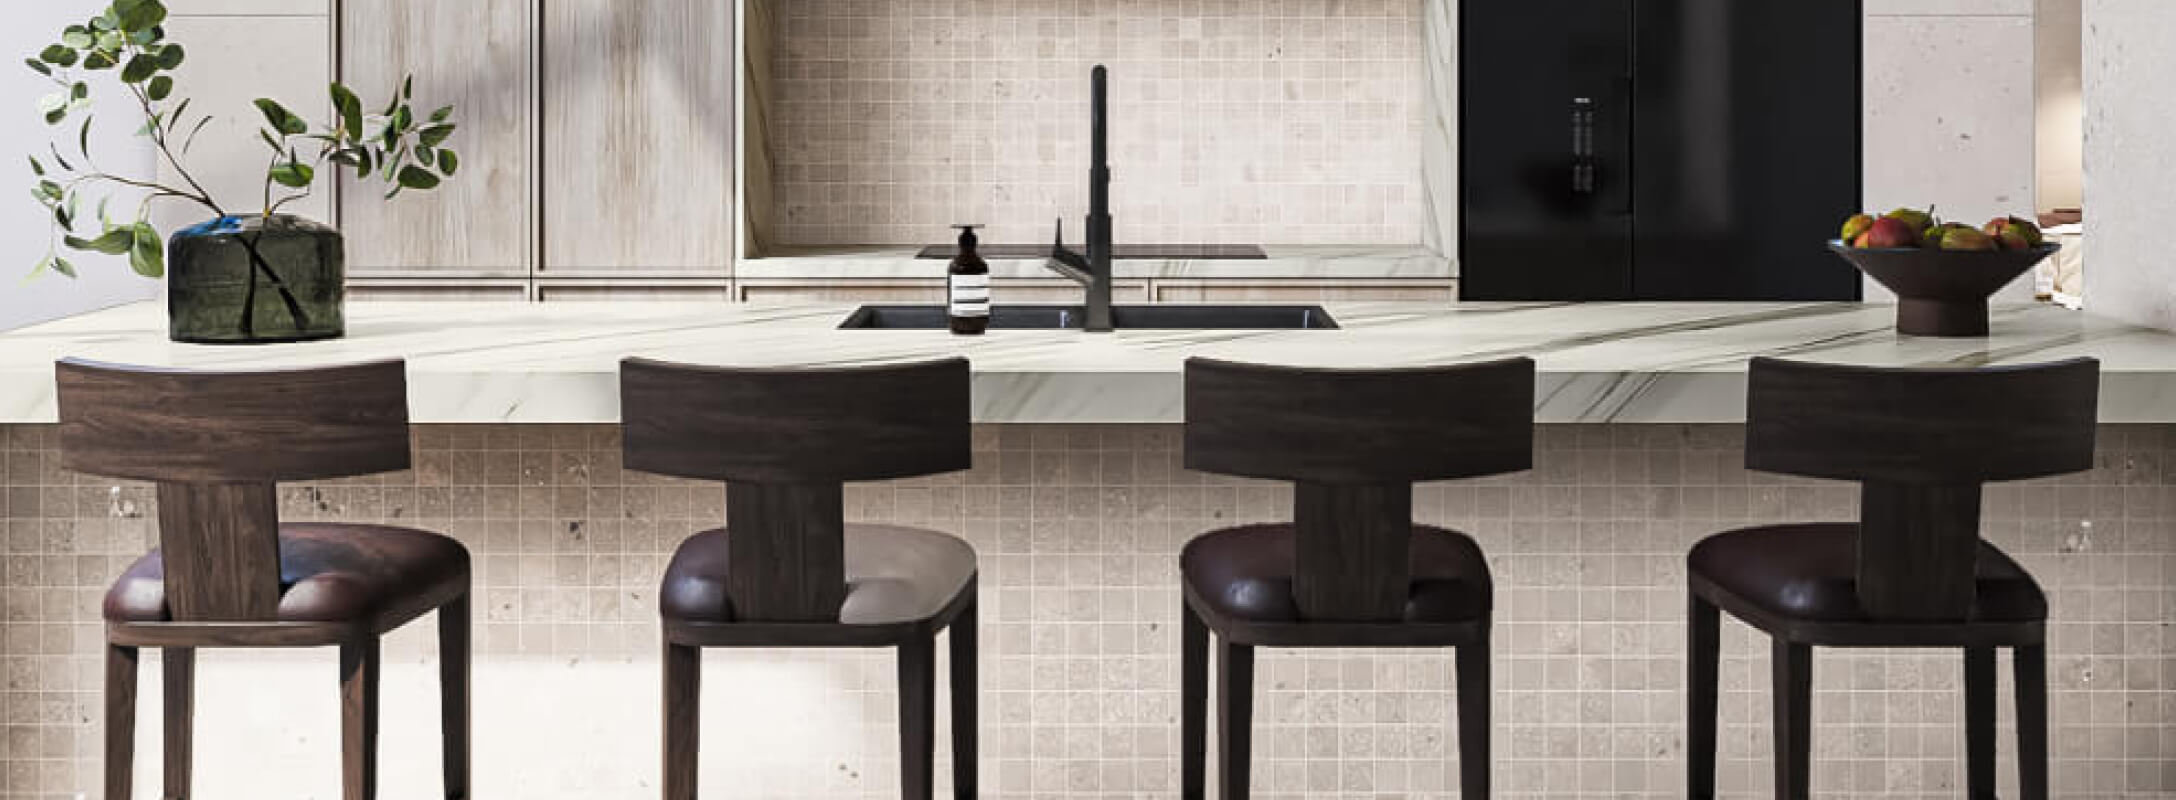 Beige mosaic kitchen tiles with a subtle sheen, creating an elegant backsplash that complements modern and minimalist kitchen designs